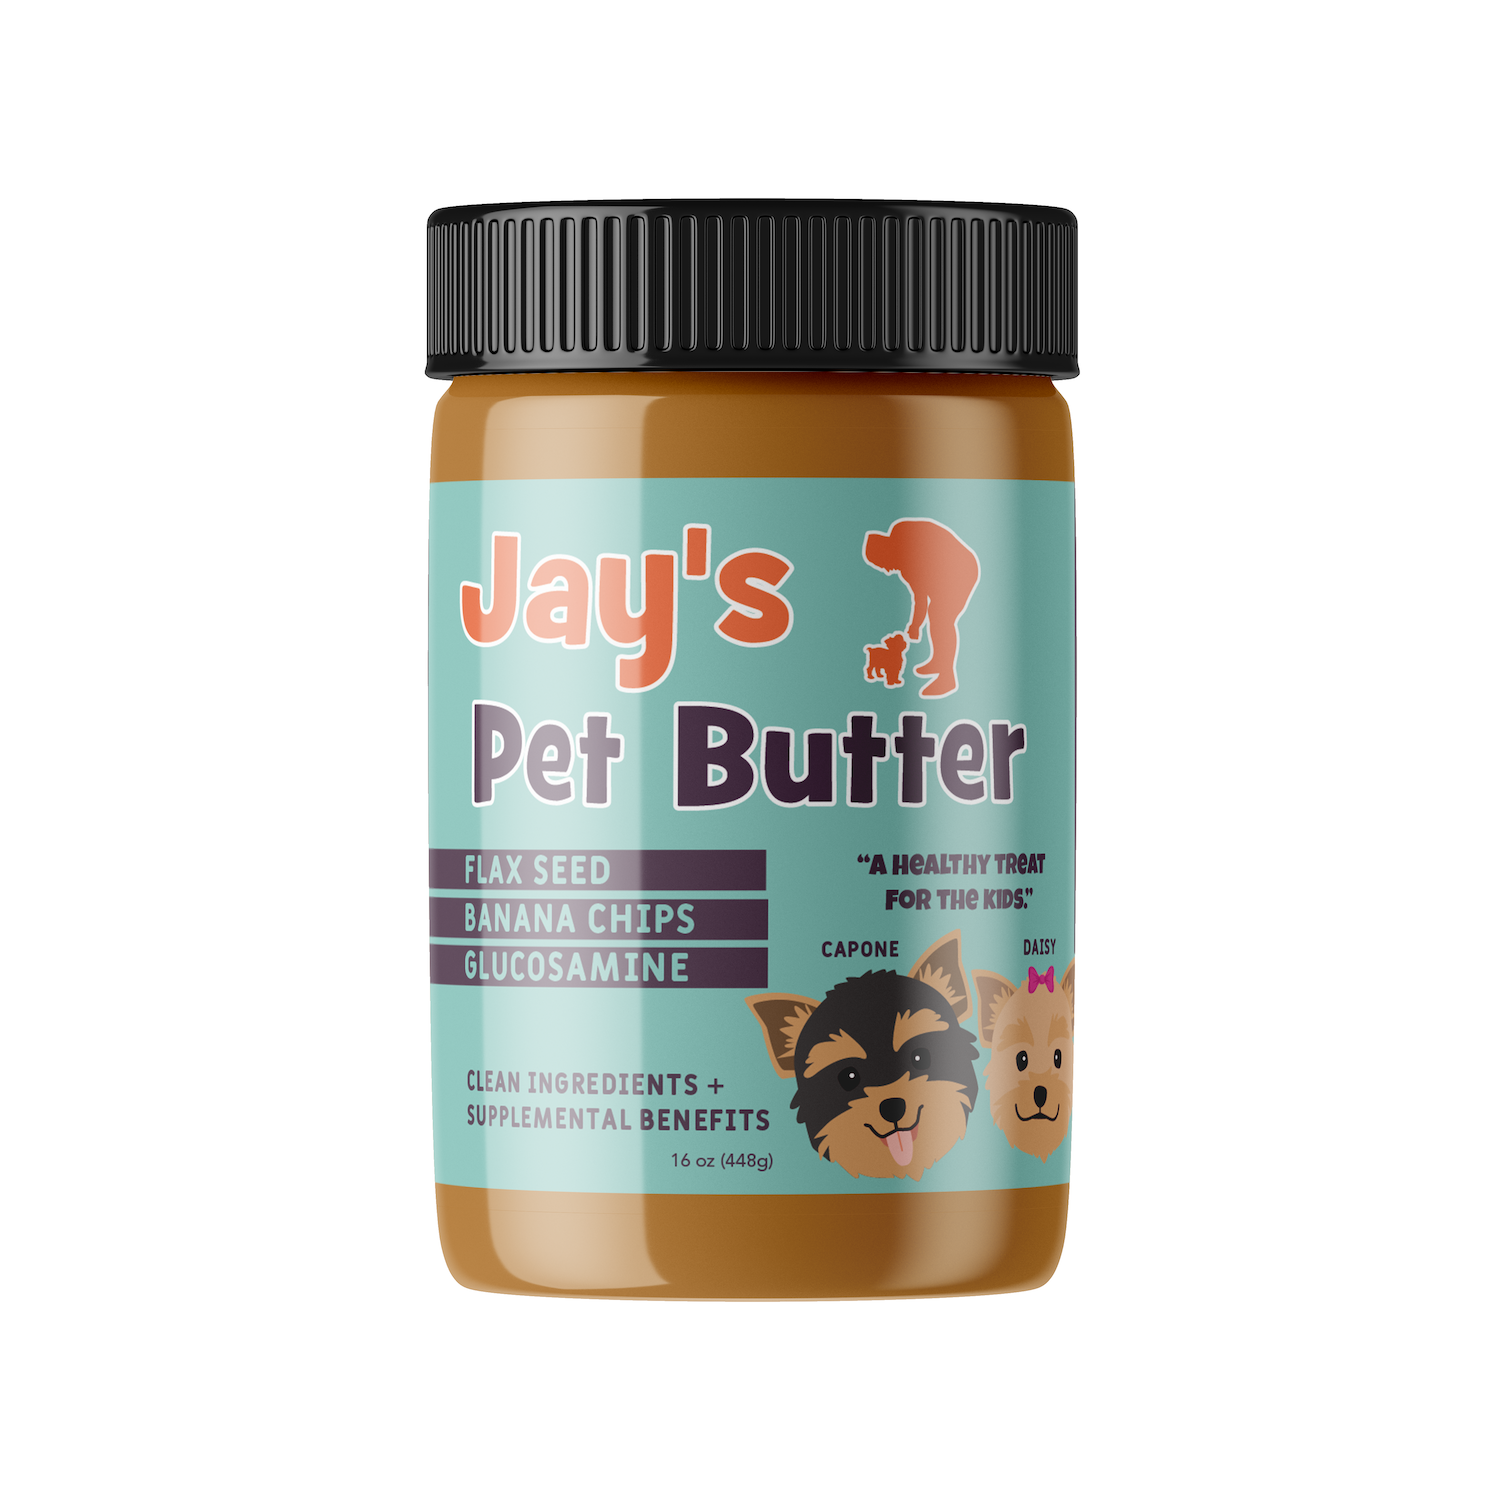 Jay's Pet Butter | Banana Chips, Flax Seeds & Glucosamine | 16 Ounce Jar